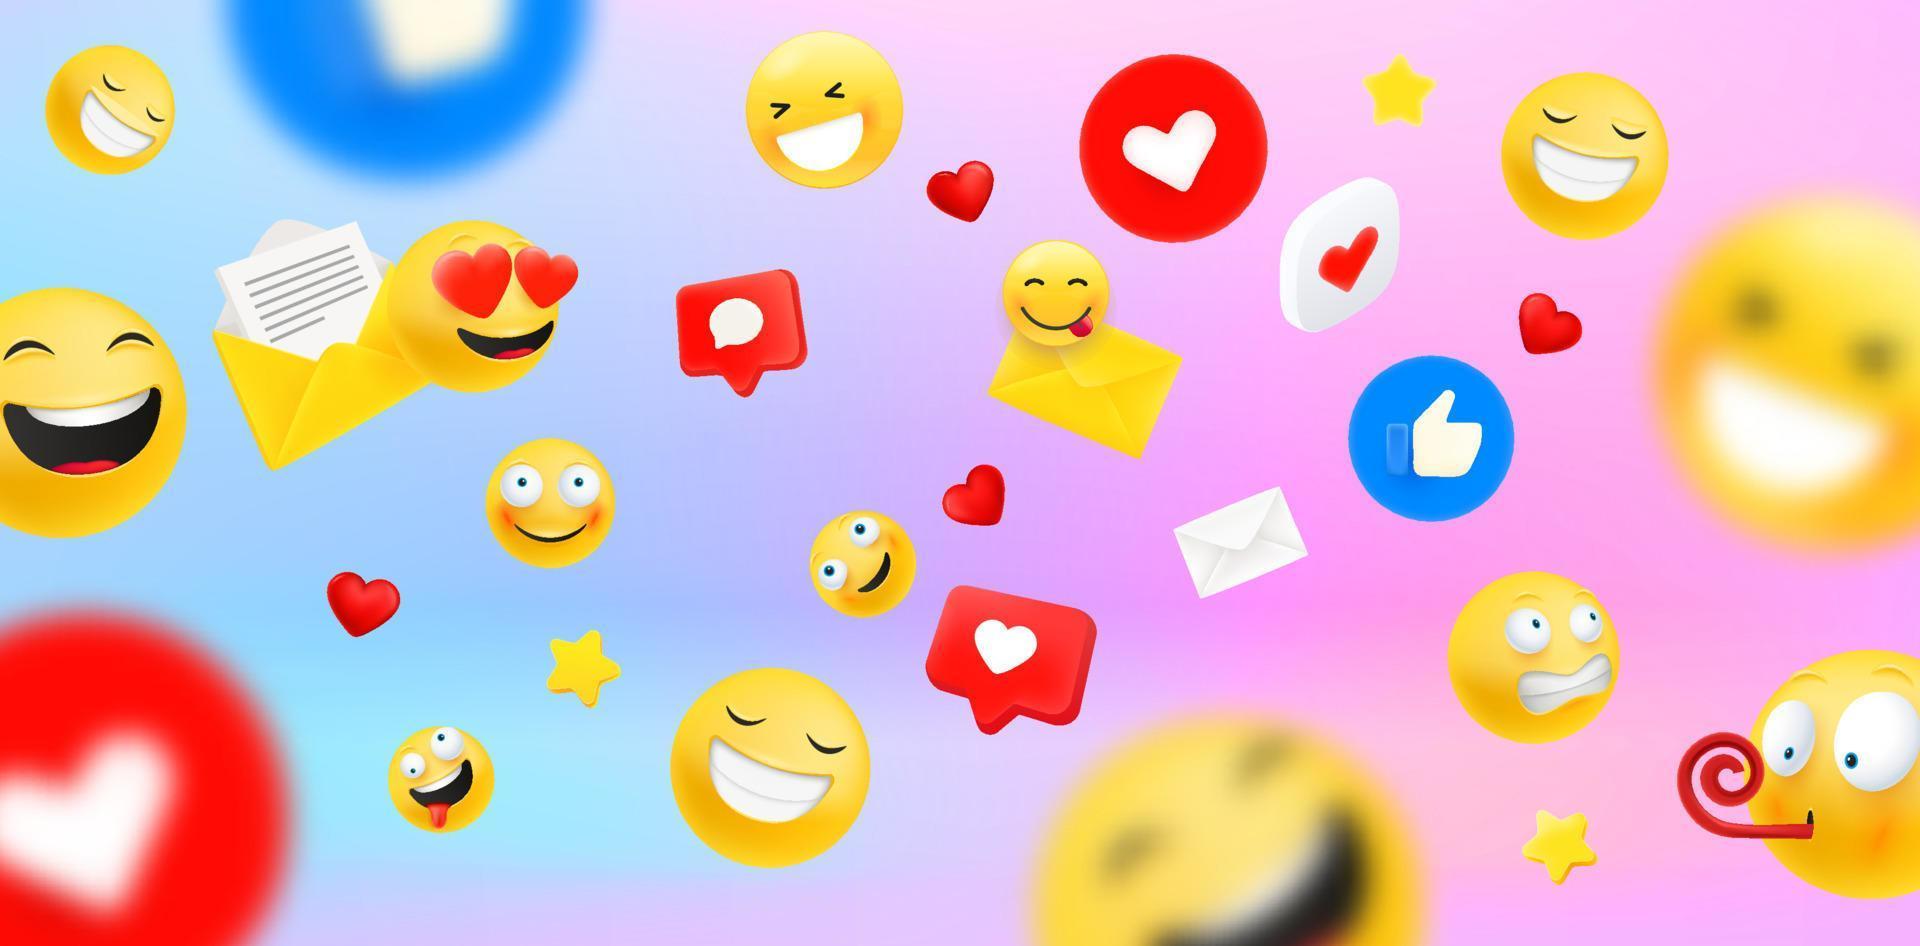 concepto de comunicación de redes sociales con diferentes emoji e iconos. ilustración vectorial 3d vector